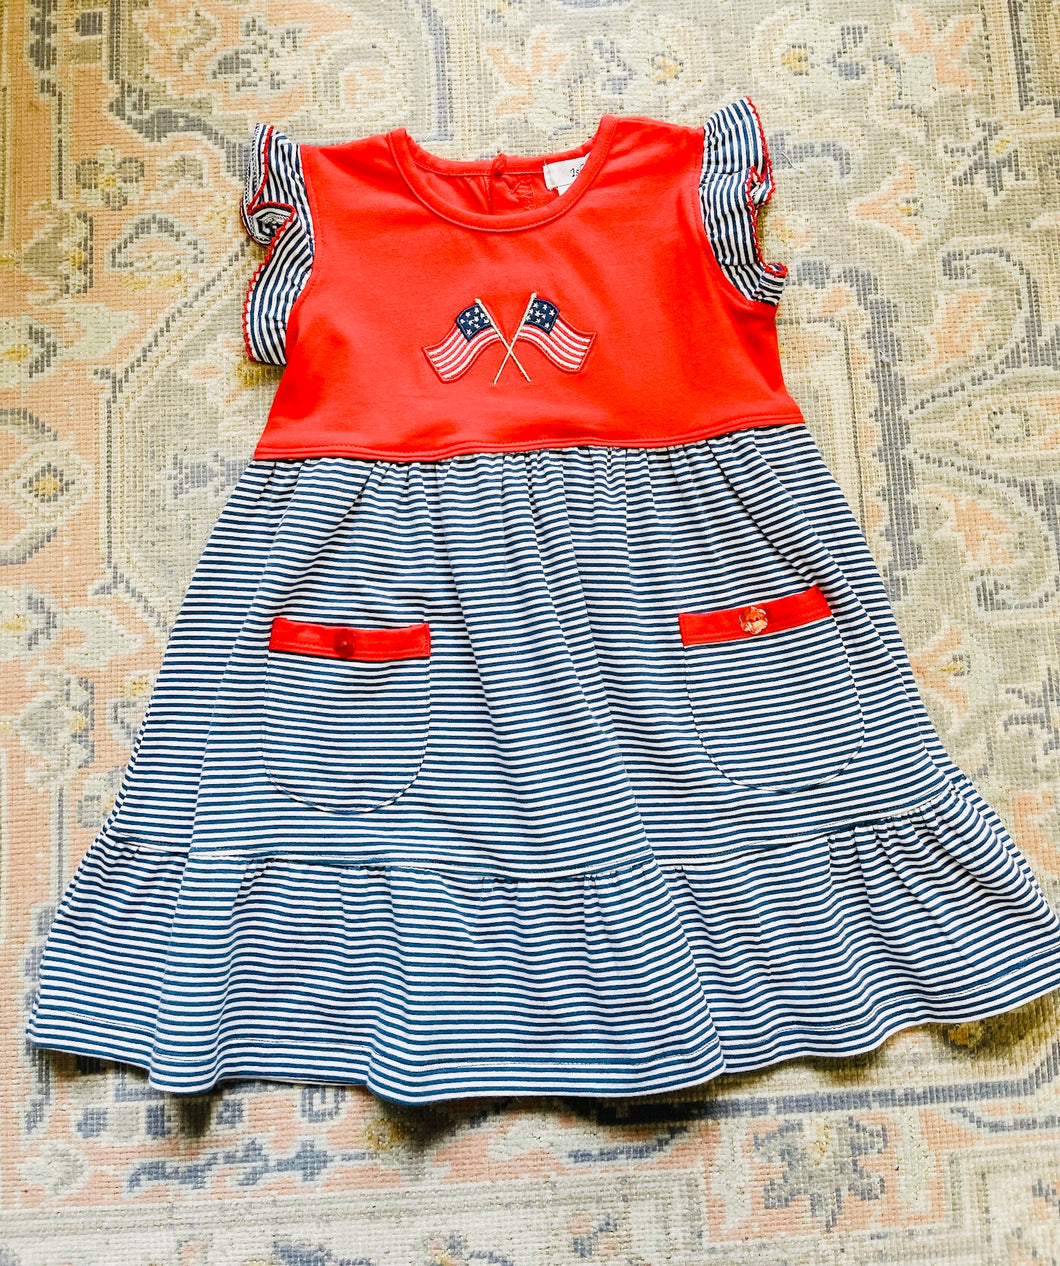 Ishtex - American Flag Applique Dress with pockets